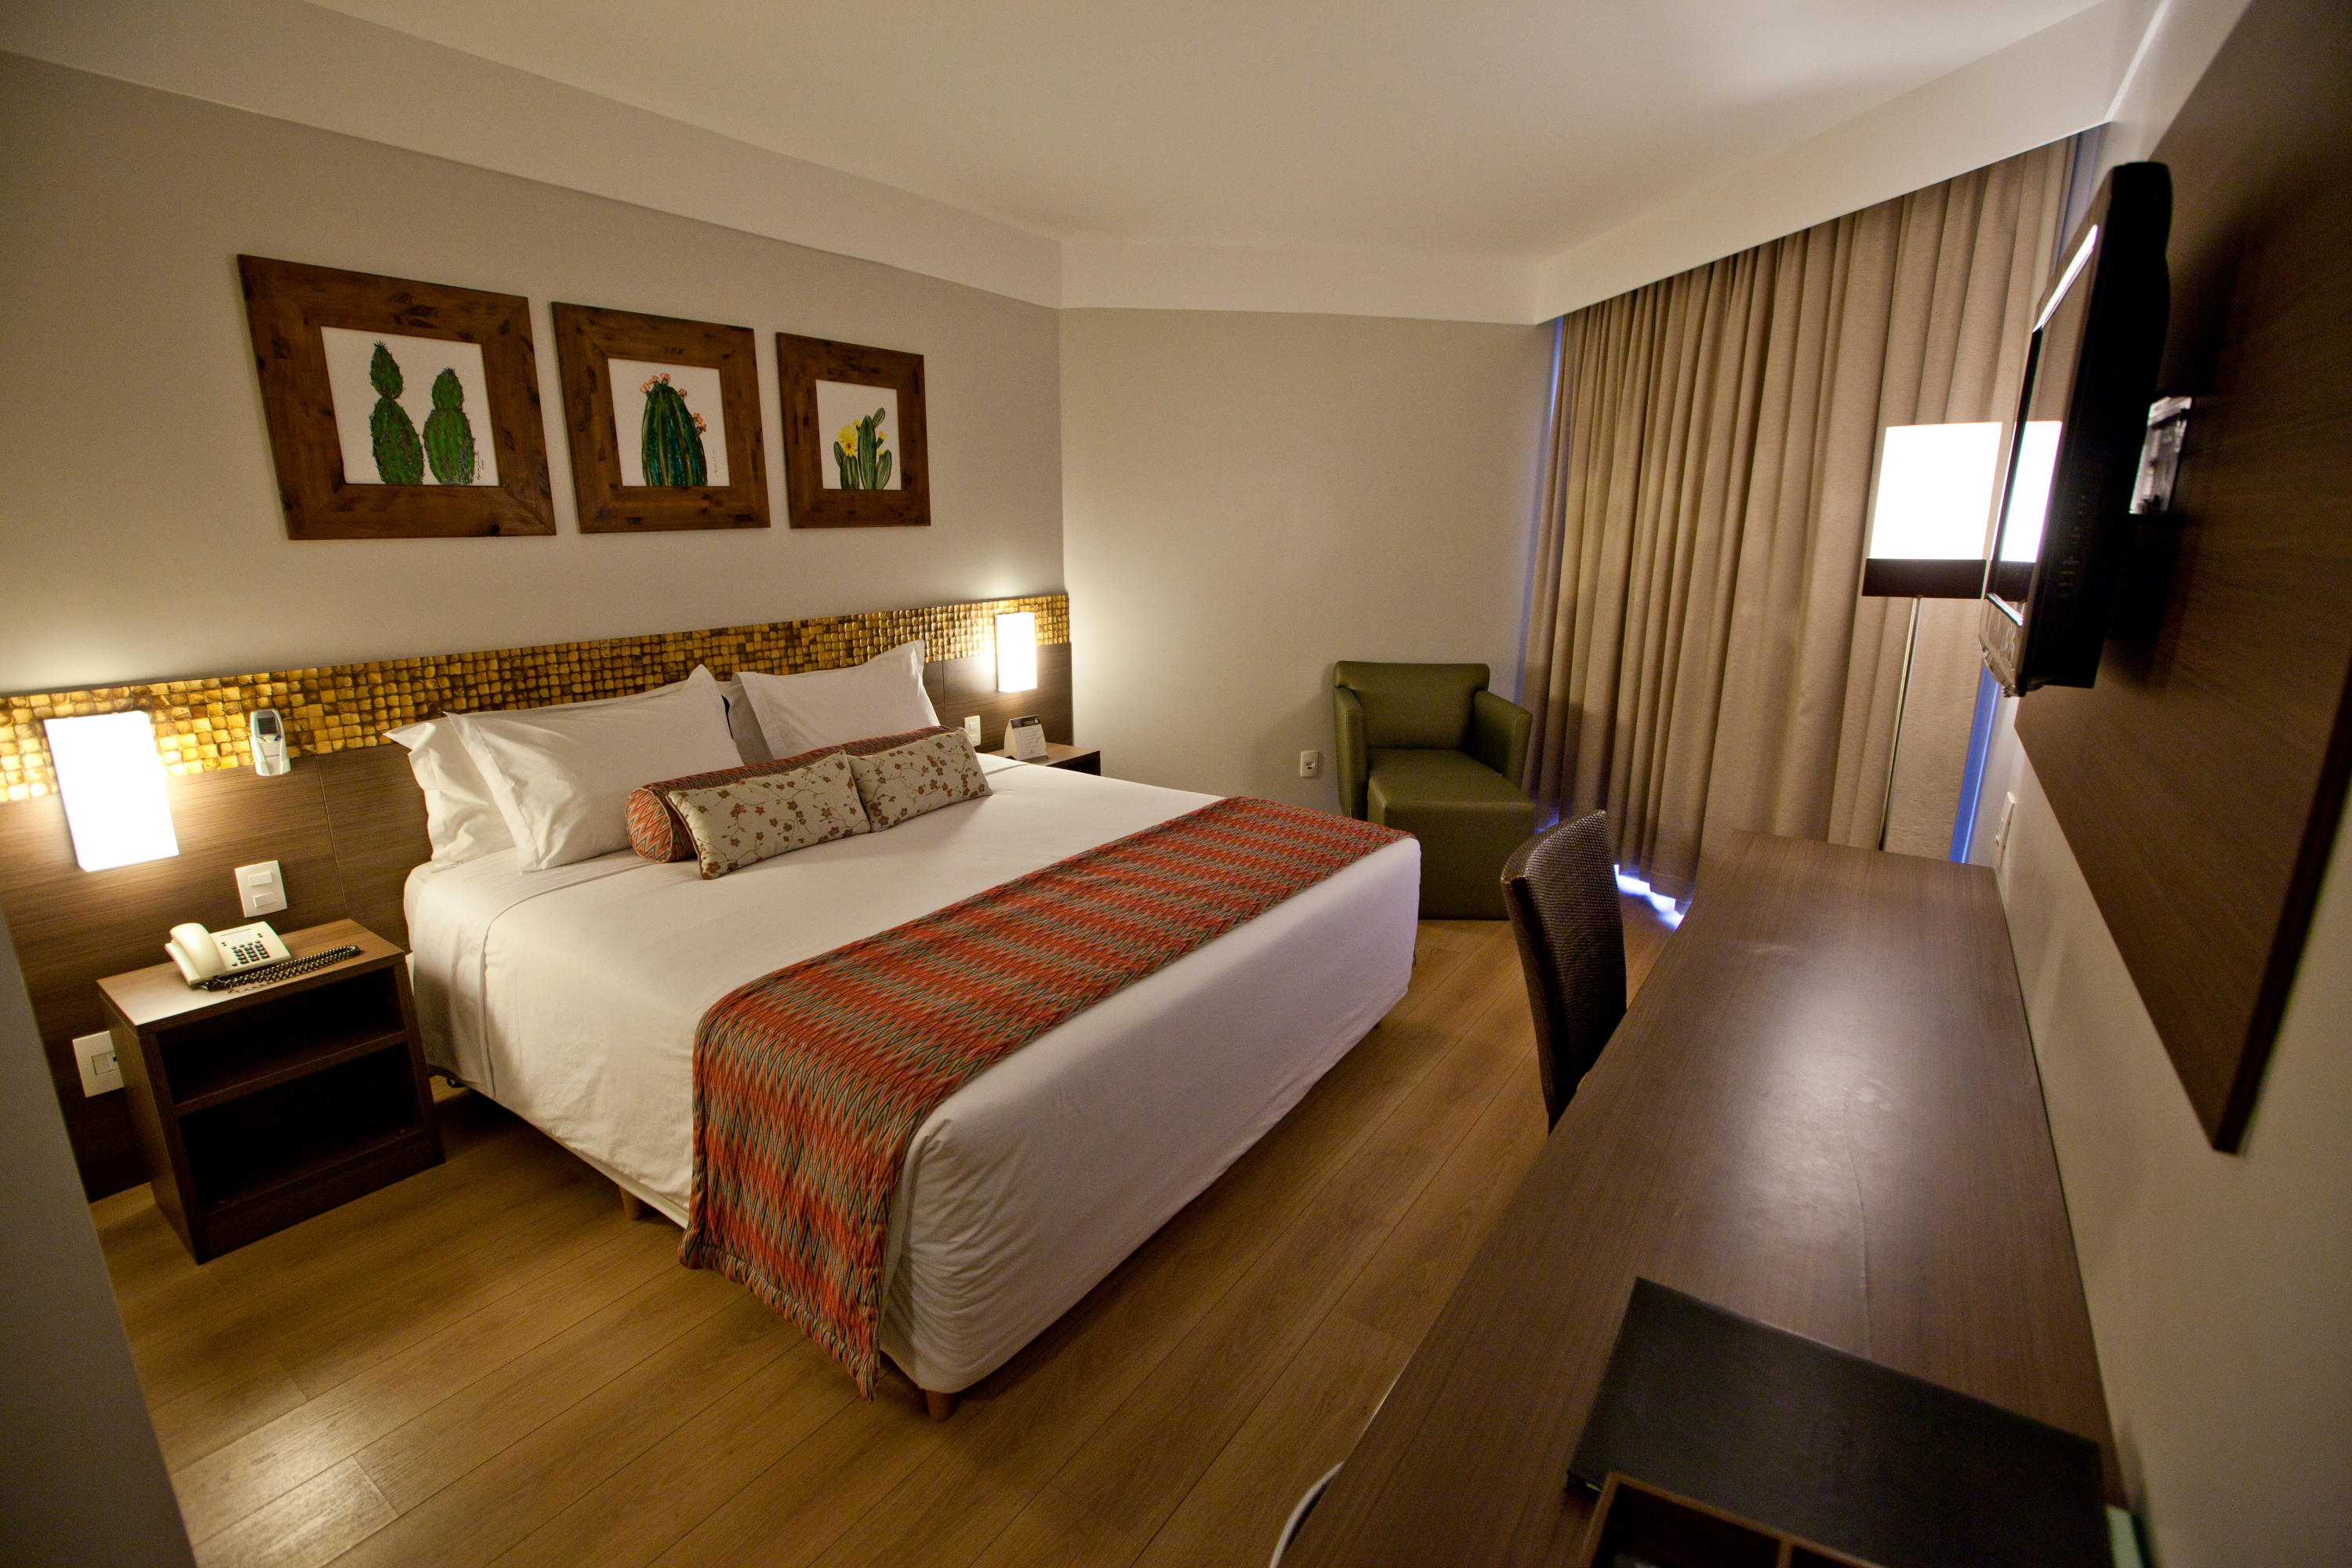 hotéis em Aracaju, Celi Hotel Hotel Celi, Celi, tartarugas, orla de Aracaju, Aracaju, fotos de Aracaju, Sergipe, hotéis em Aracaju, lugar Perfeito, acessibilidade